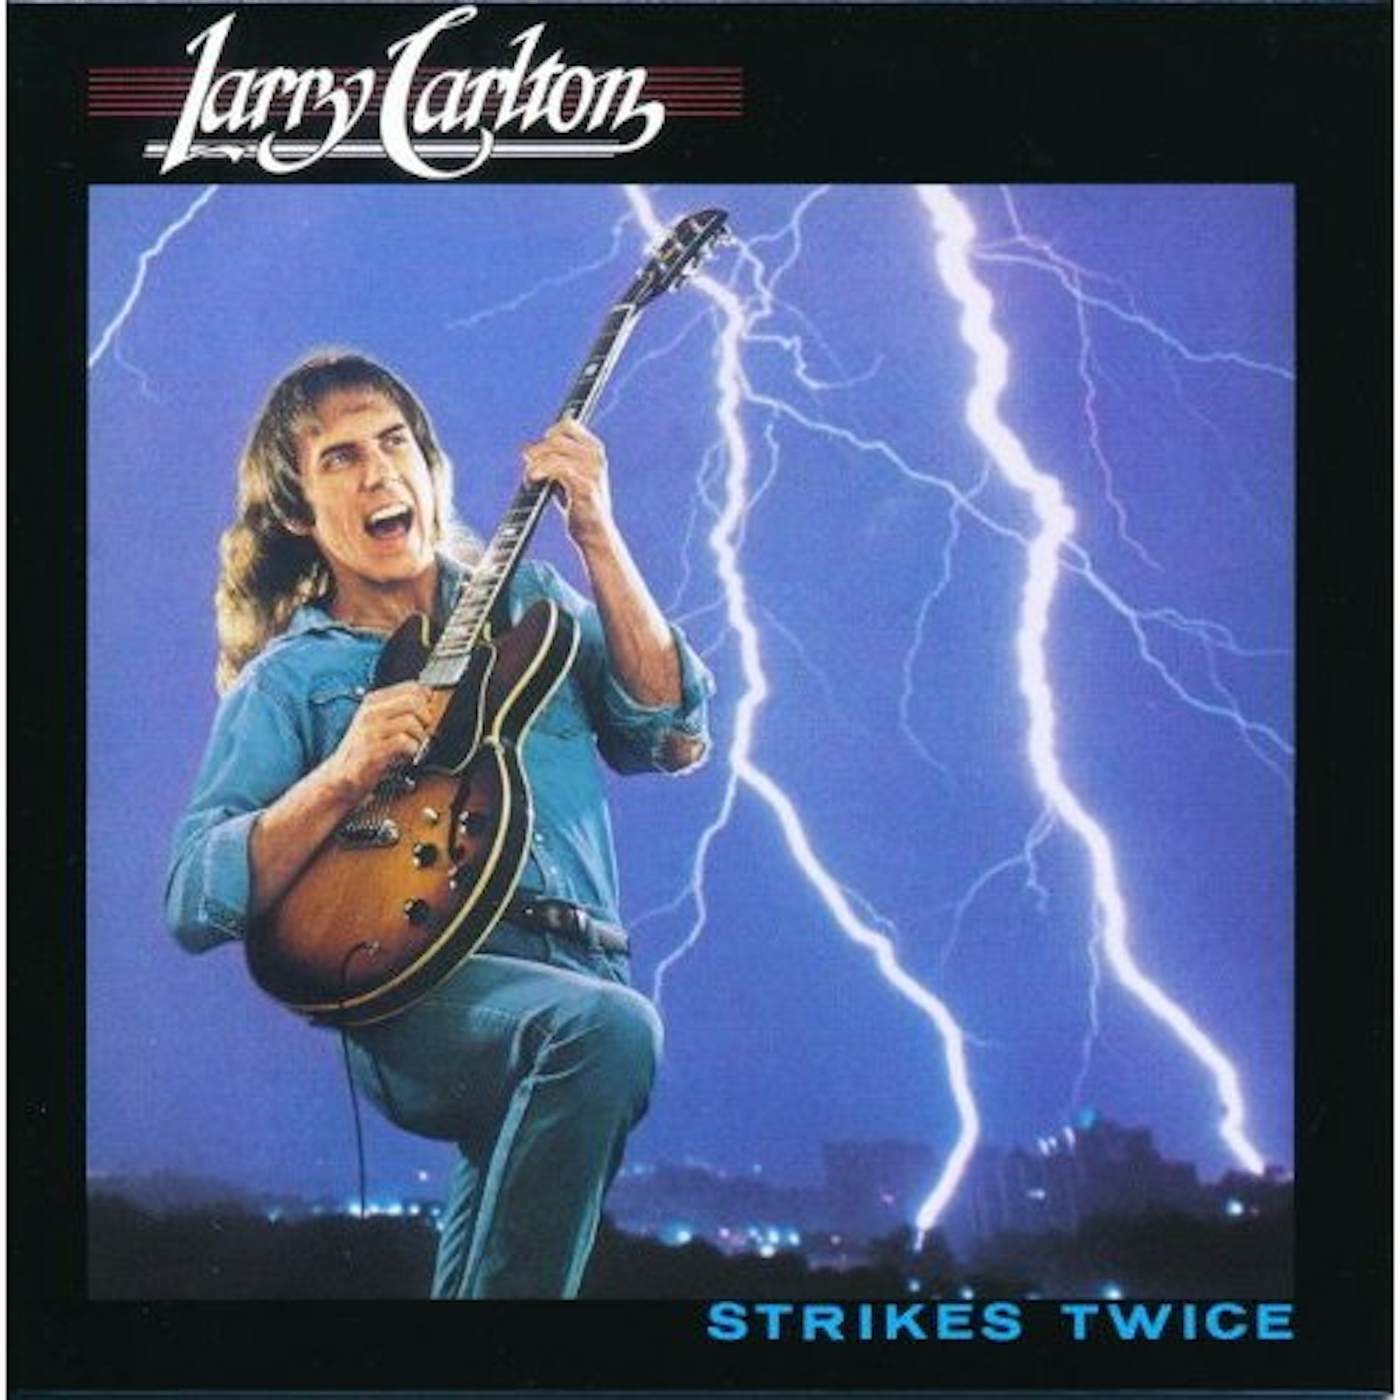 Larry Carlton STRIKES TWICE CD